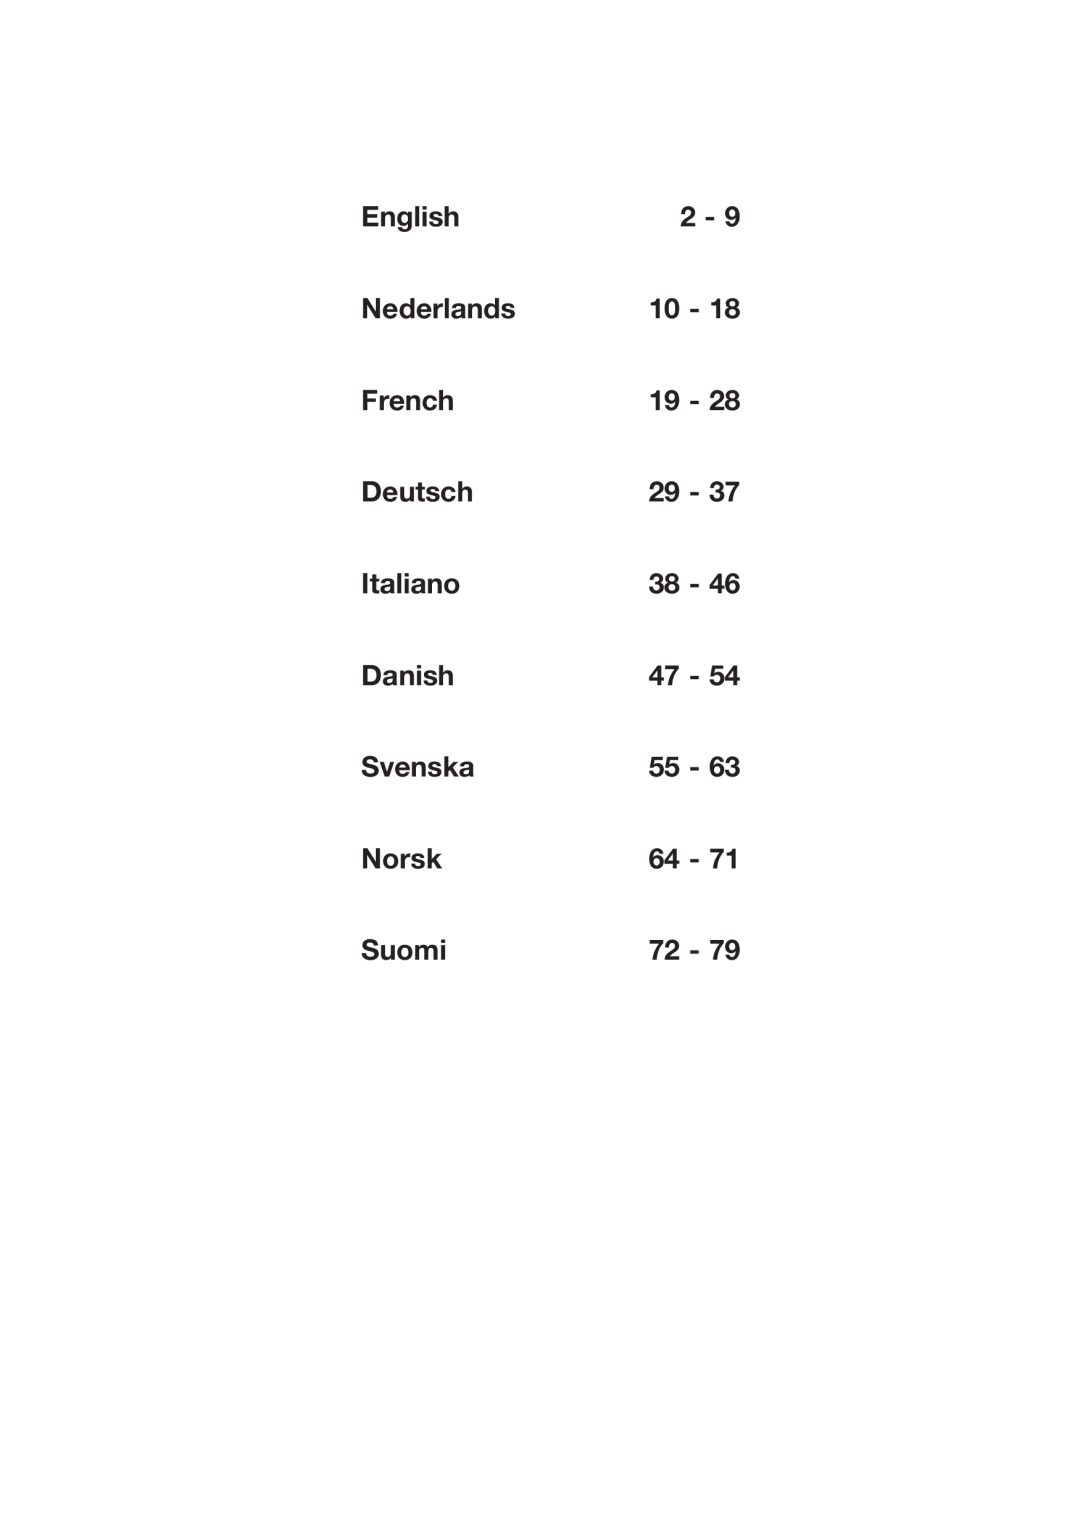 Kenwood BM210 manual English, Nederlands, French, 19, Deutsch, 29, Italiano, 38, Danish, Svenska, 55, Norsk, Suomi, 72 